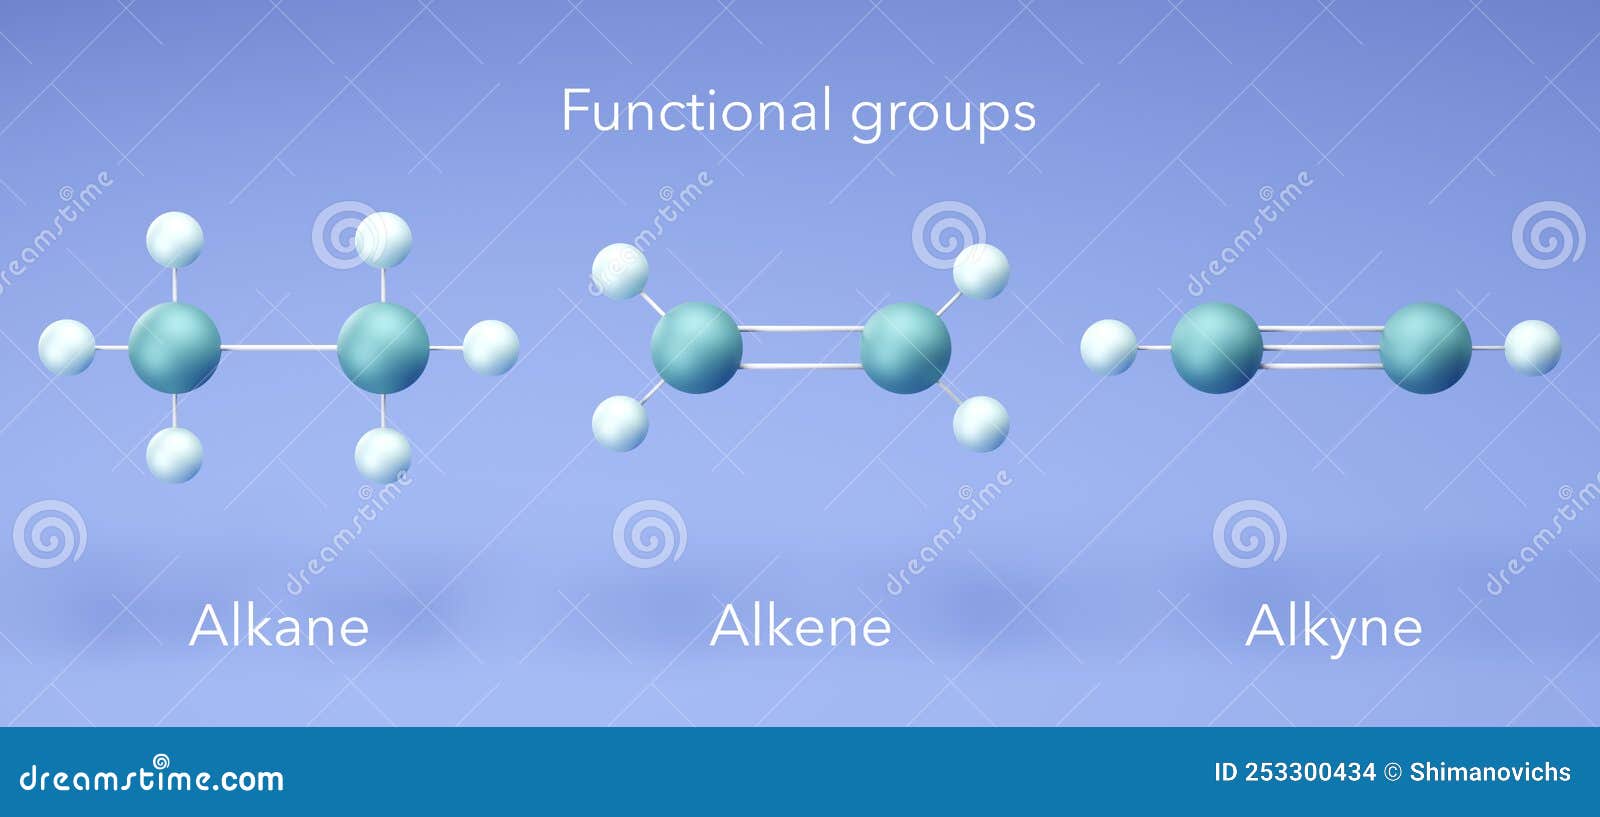 alkane, alkene, alkyne - functional groups, organic chemical, molecular structures, 3d rendering